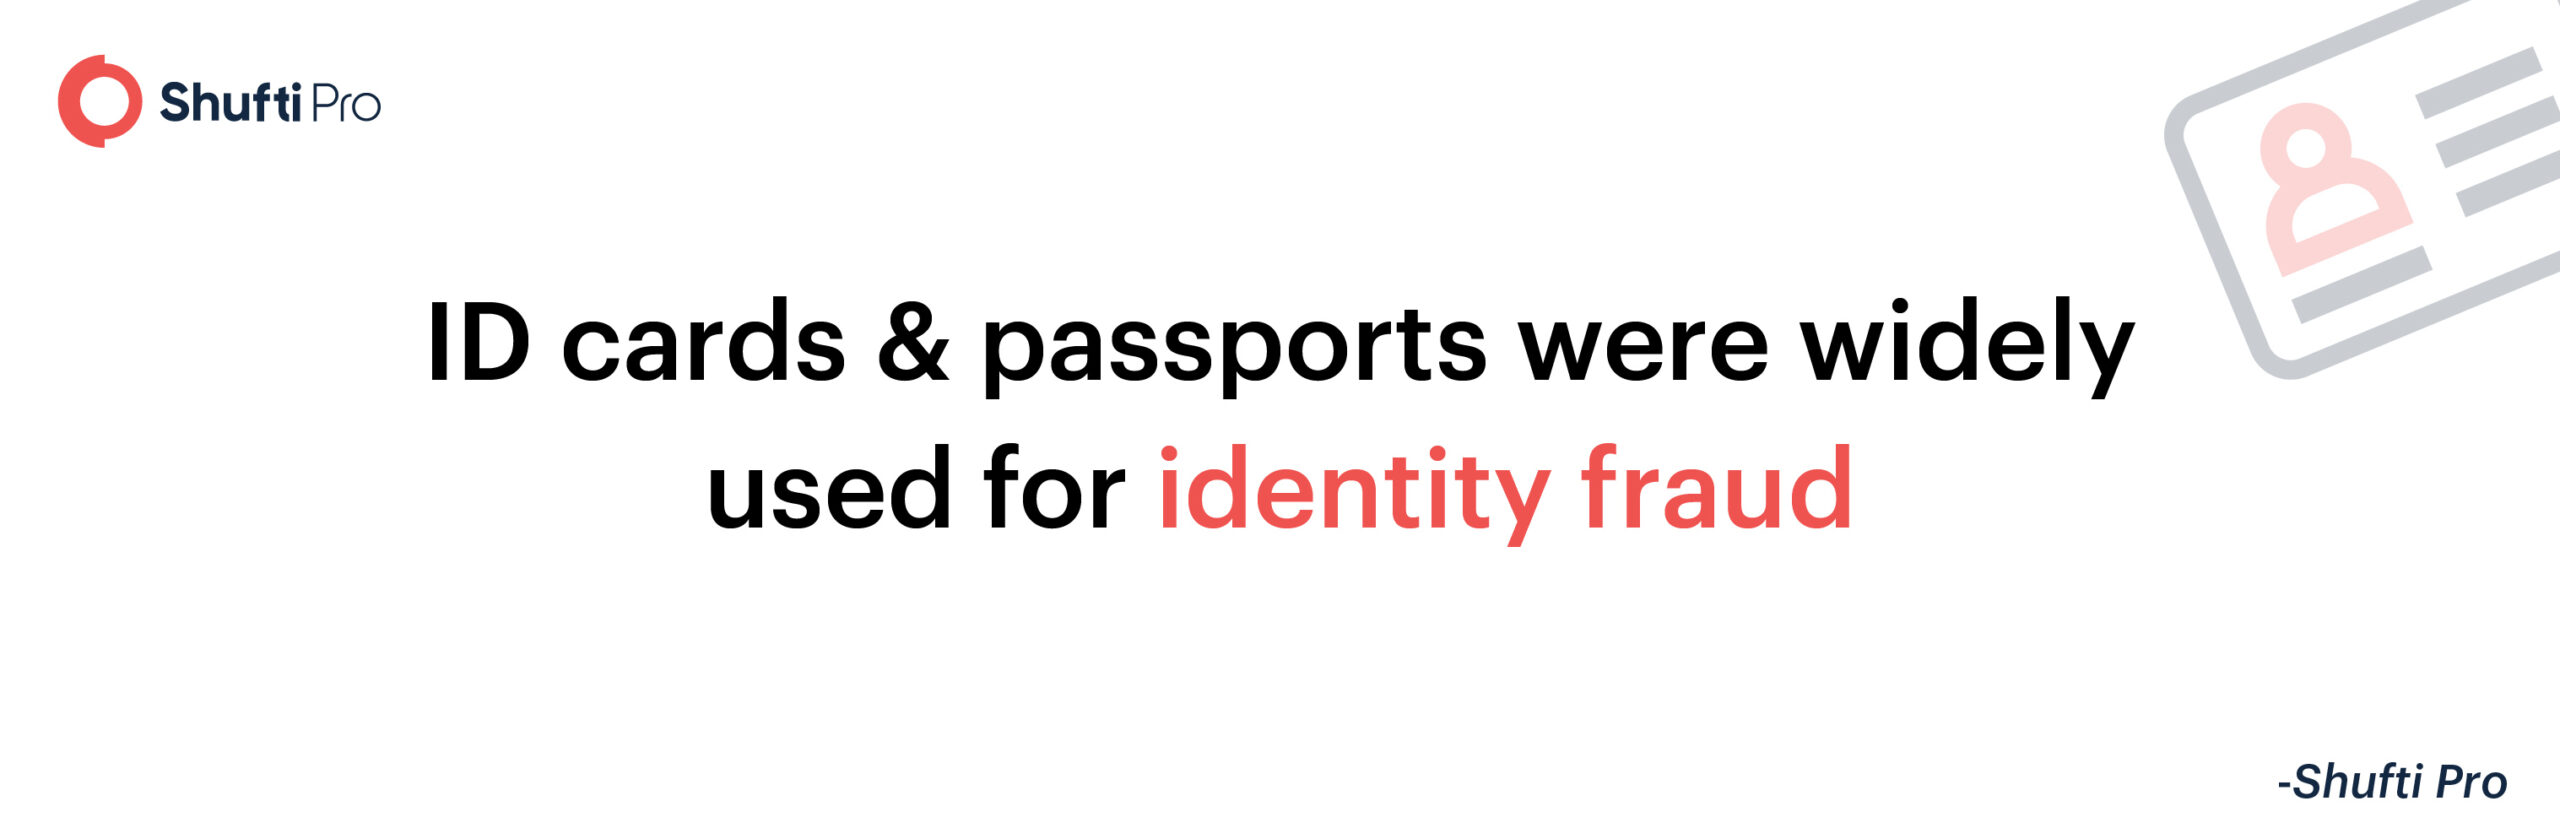 Identity fraud